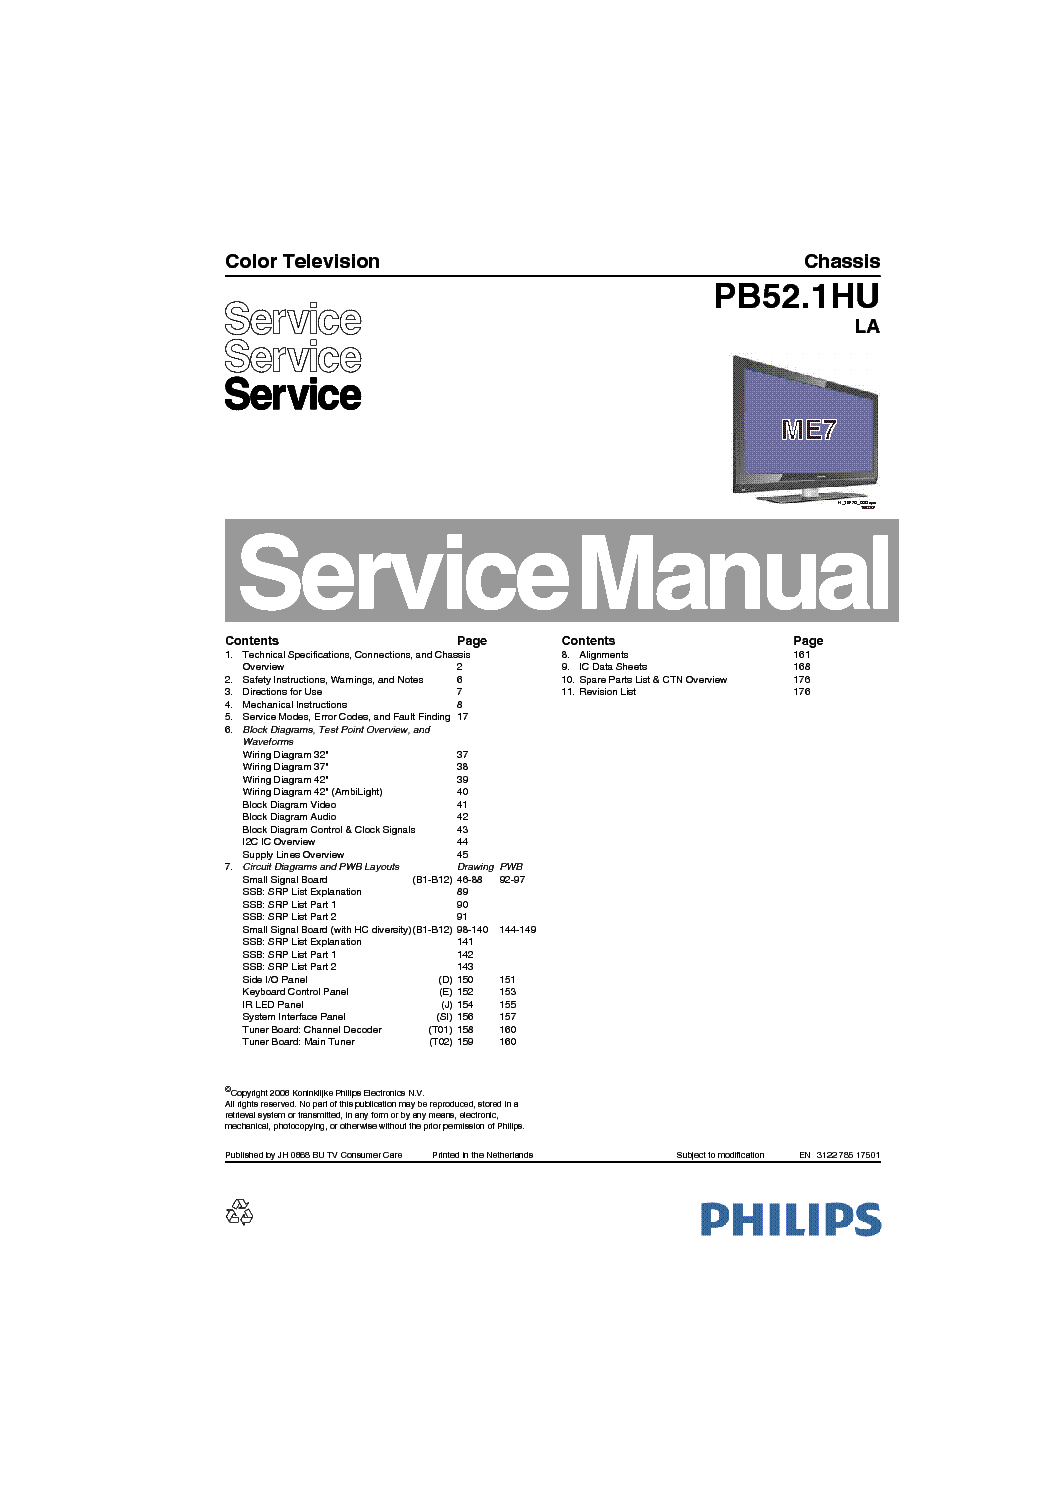 PHILIPS CHASSIS PB52.1HU-LA service manual (1st page)